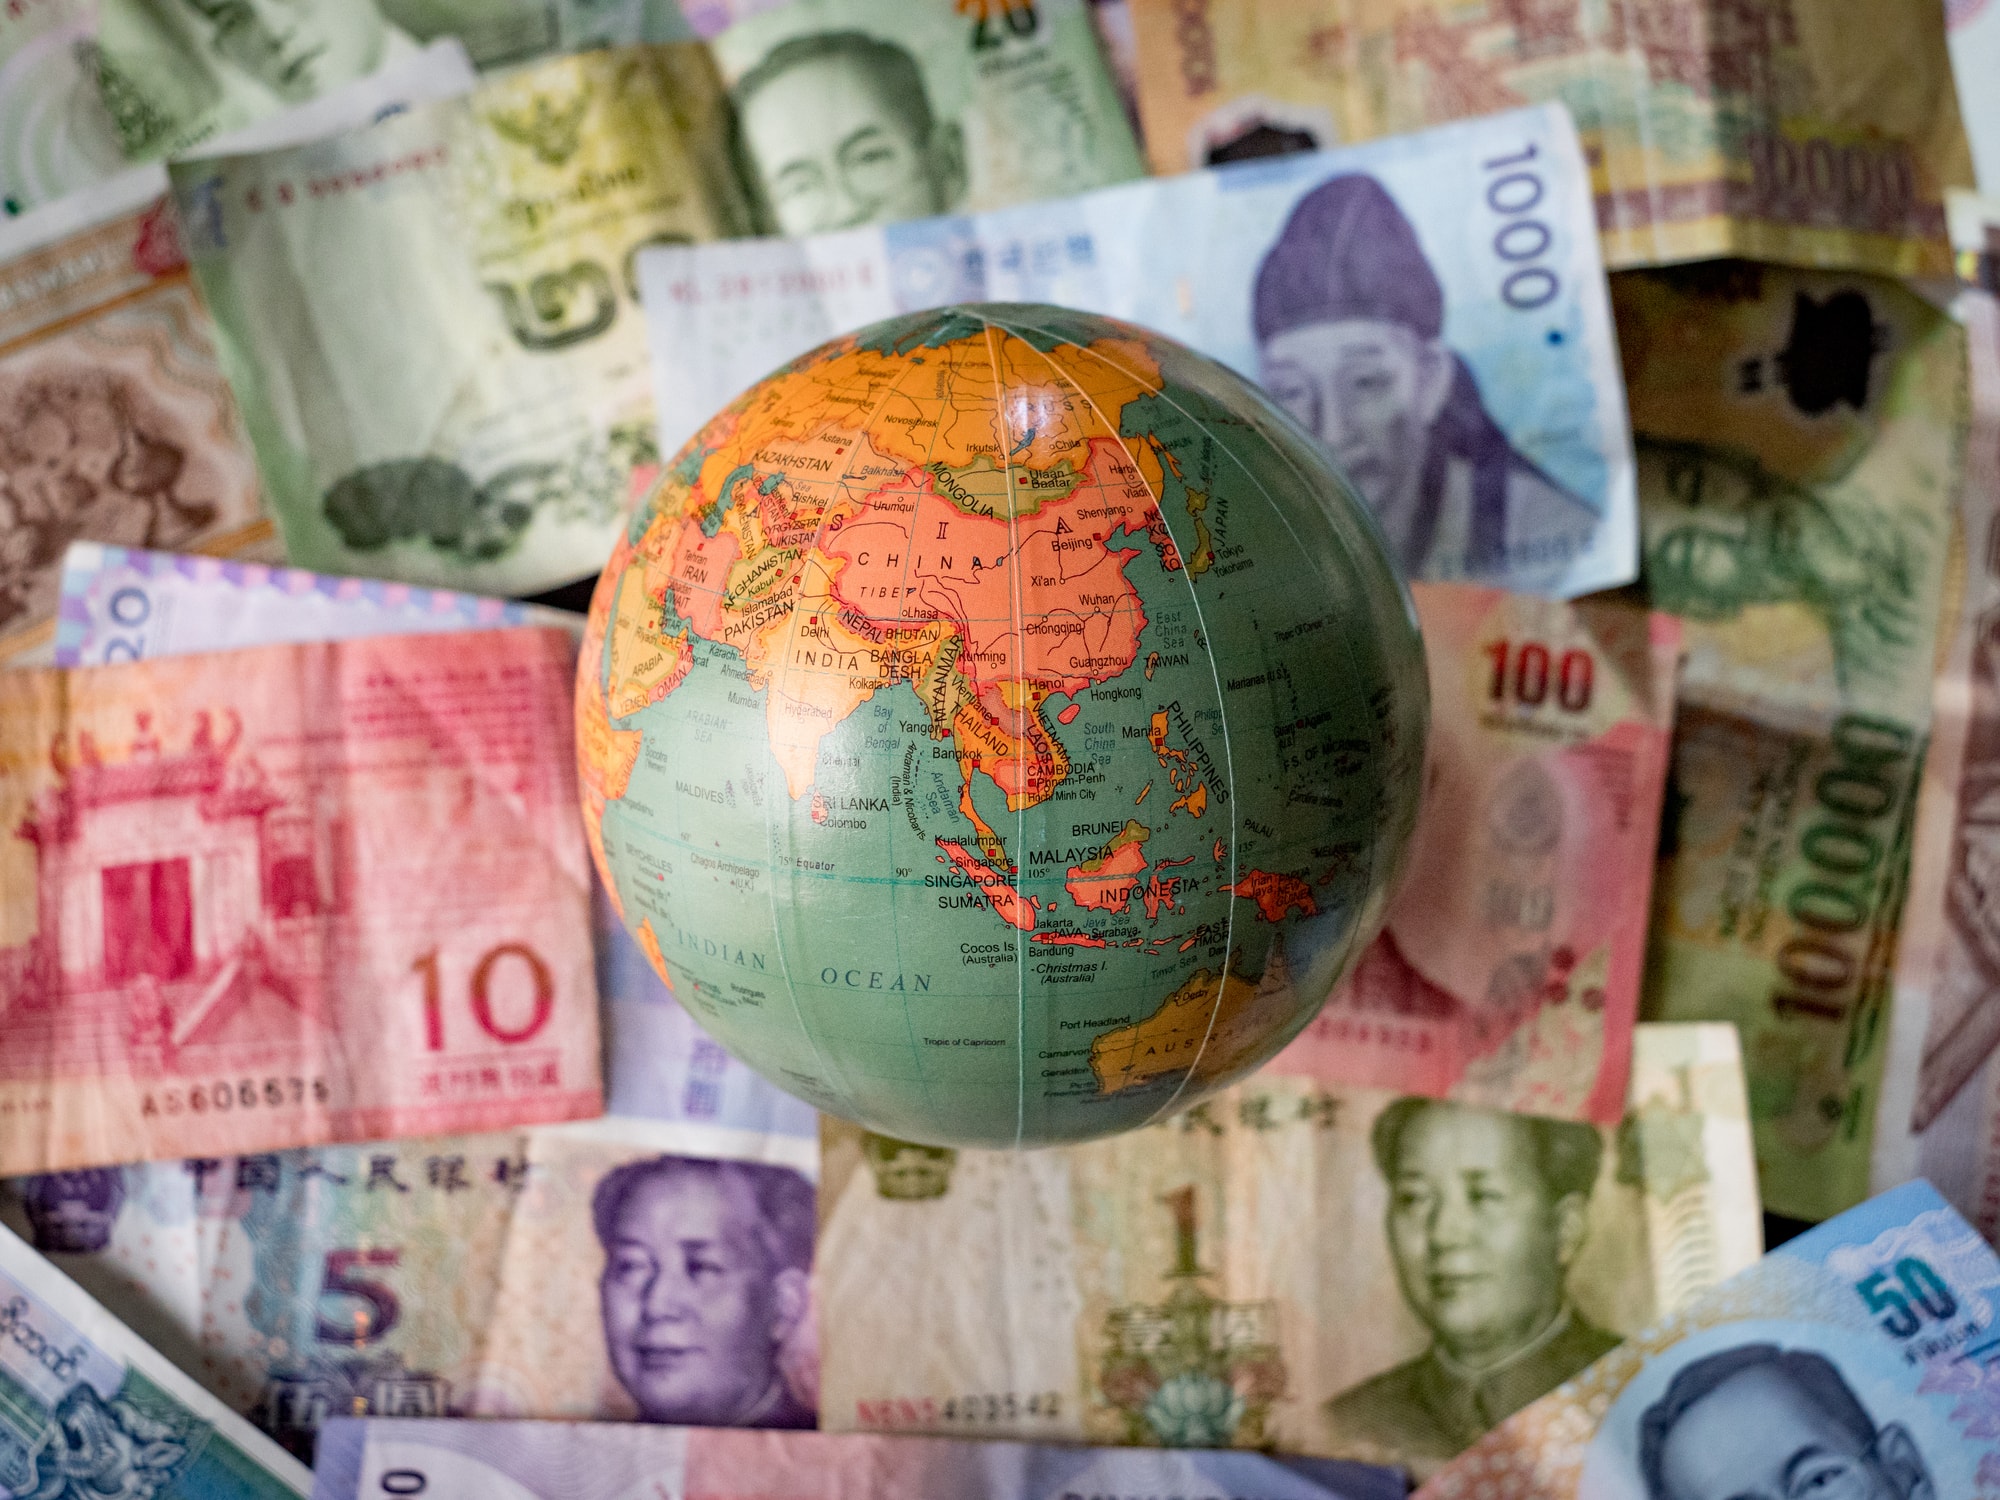 Globe sitting on top of international money.